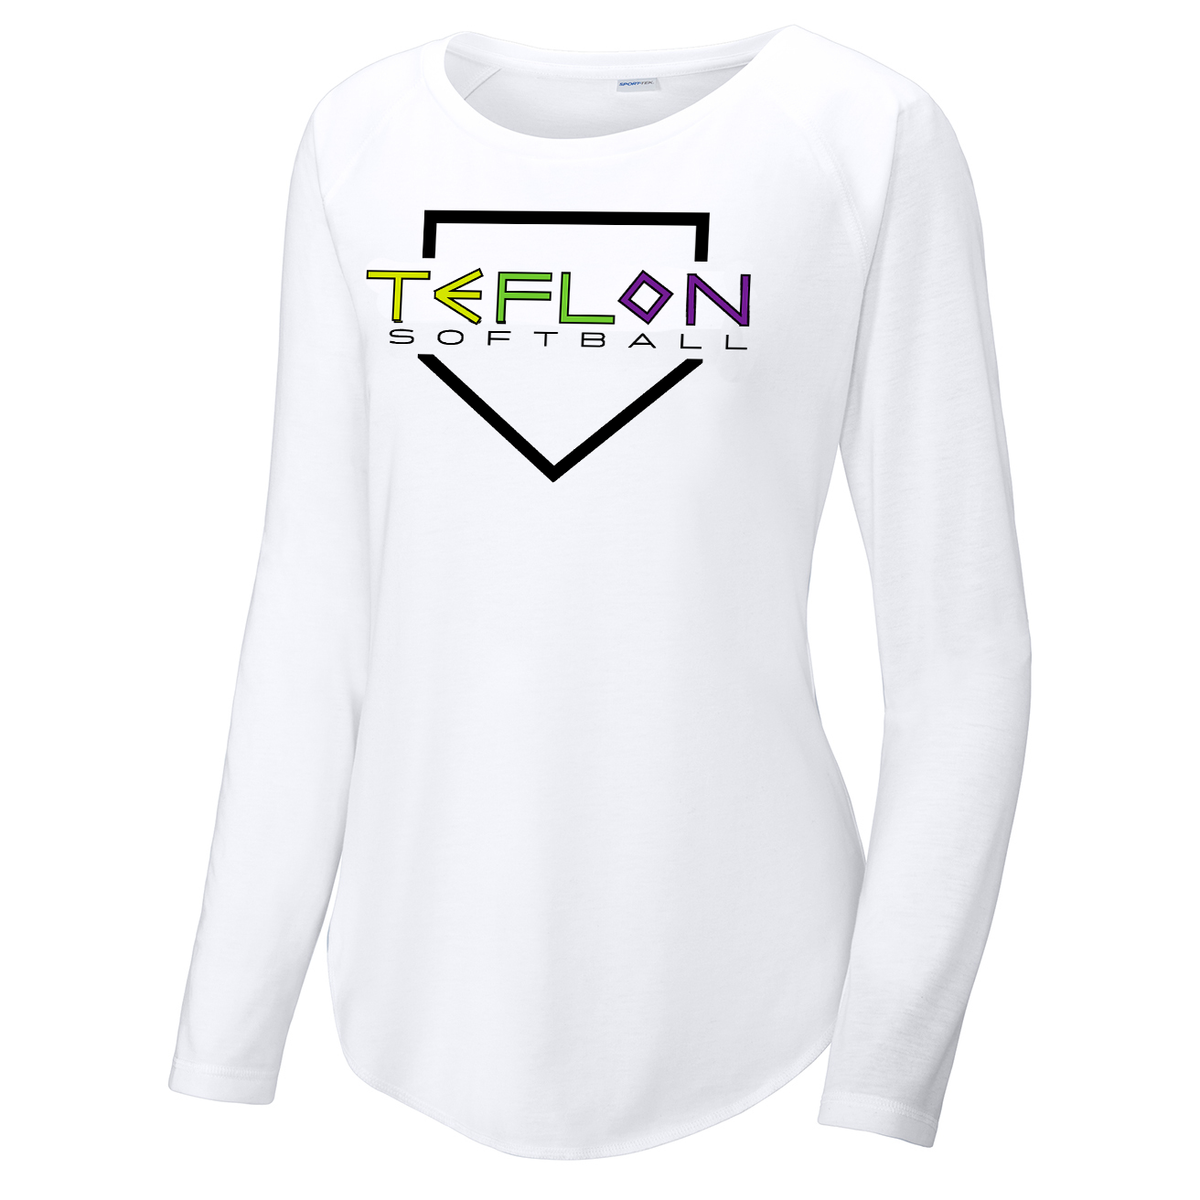 Team Teflon Softball Women's Raglan Long Sleeve CottonTouch